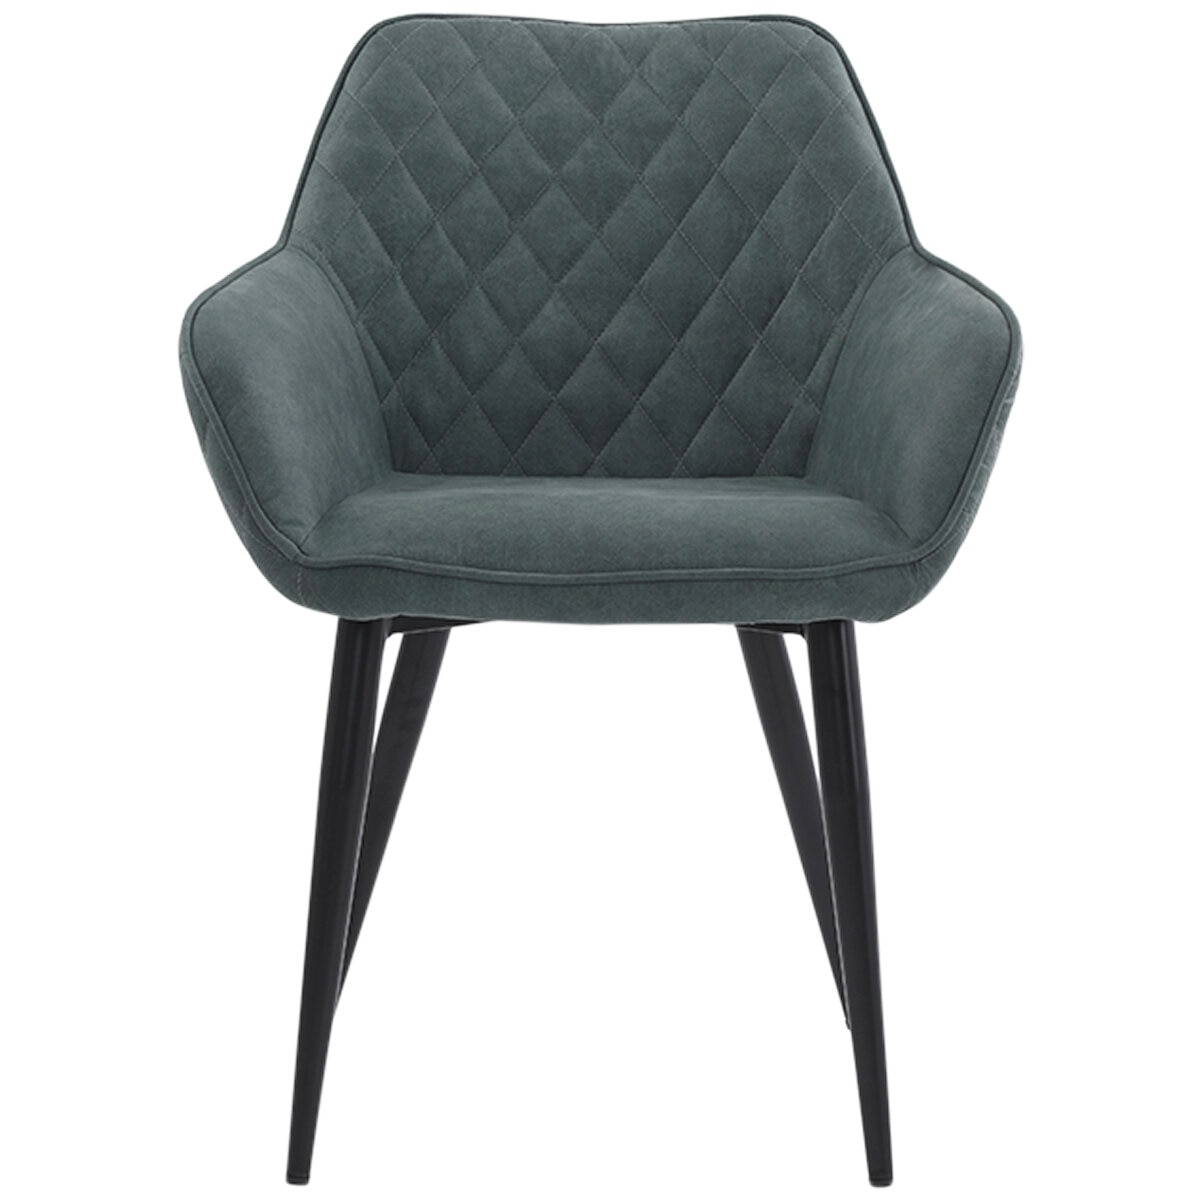 142279-Onex RiVa Dining Chair Dark Green